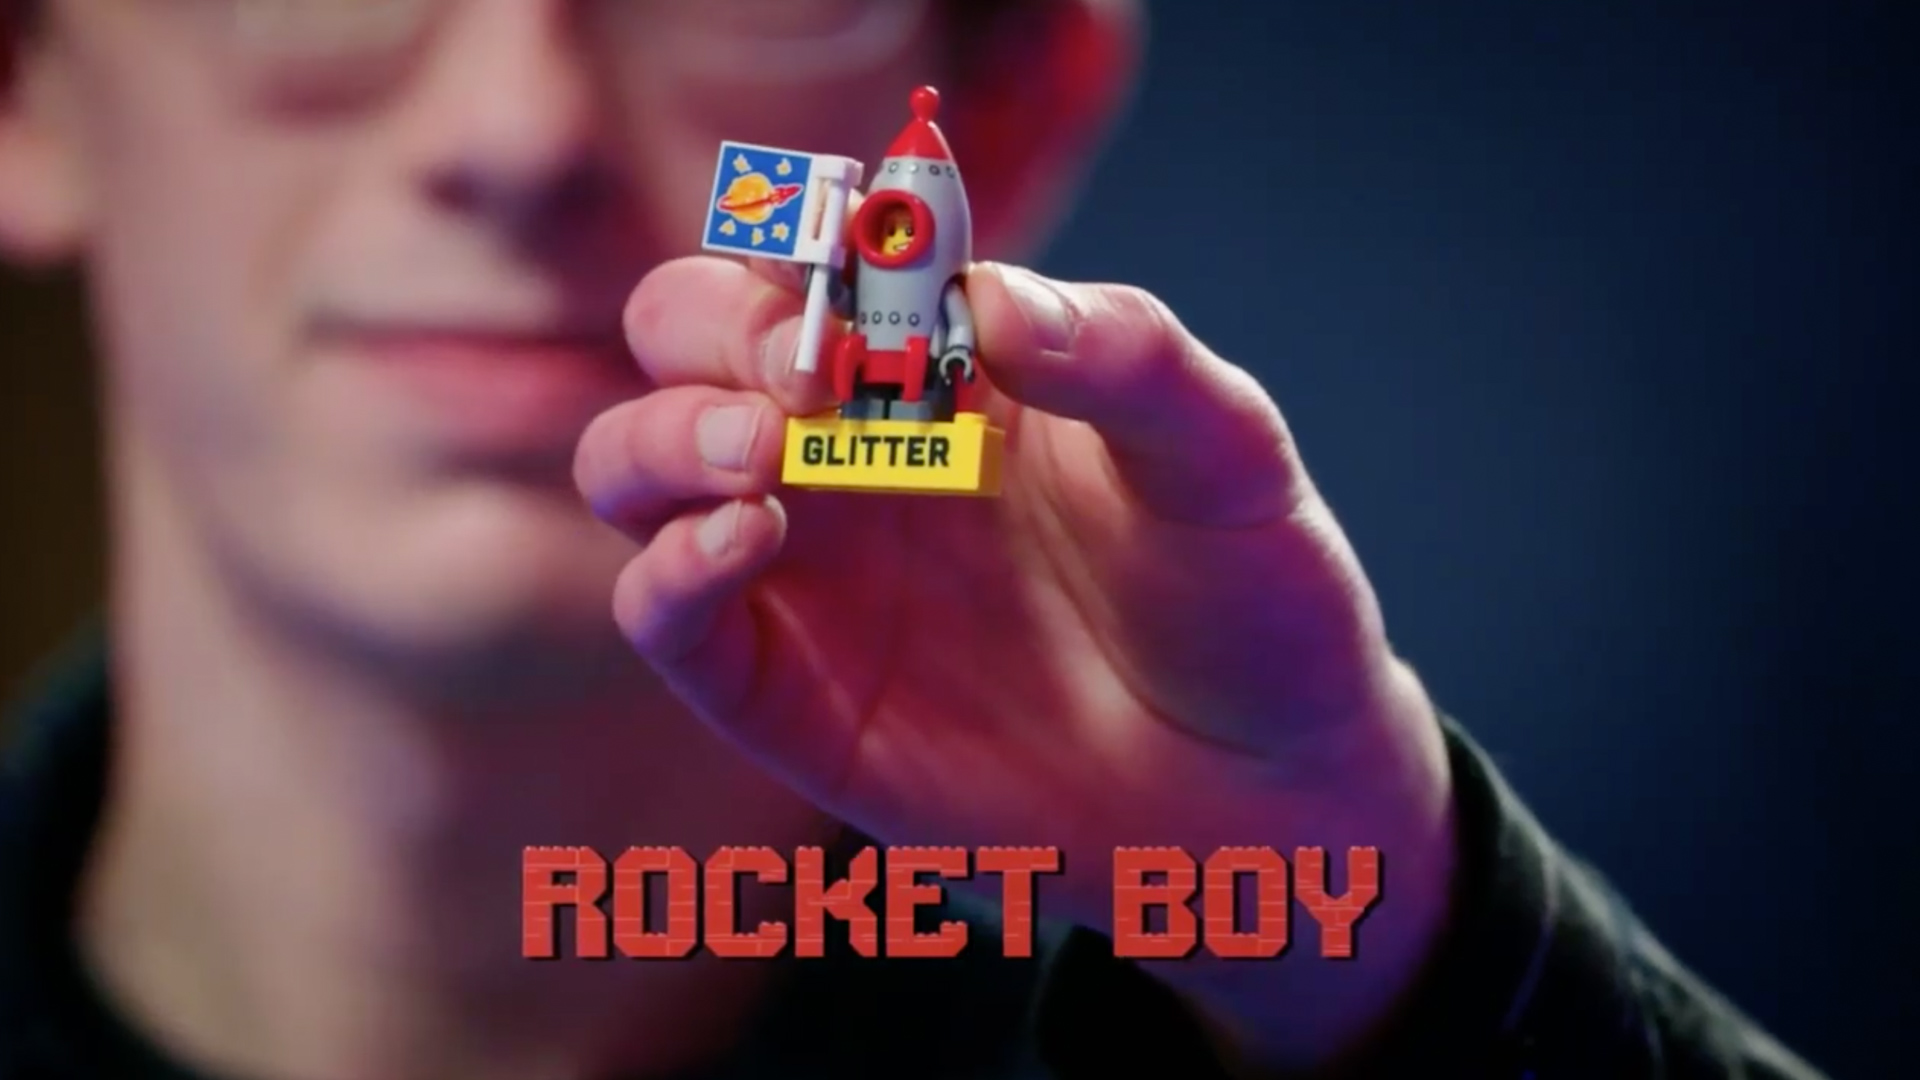 LEGO Masters U.S Season 2 – Explosion Challenge – Caleb and Jacob - Rocket Boy - Glitter - Rocket Boy Defends The Moon